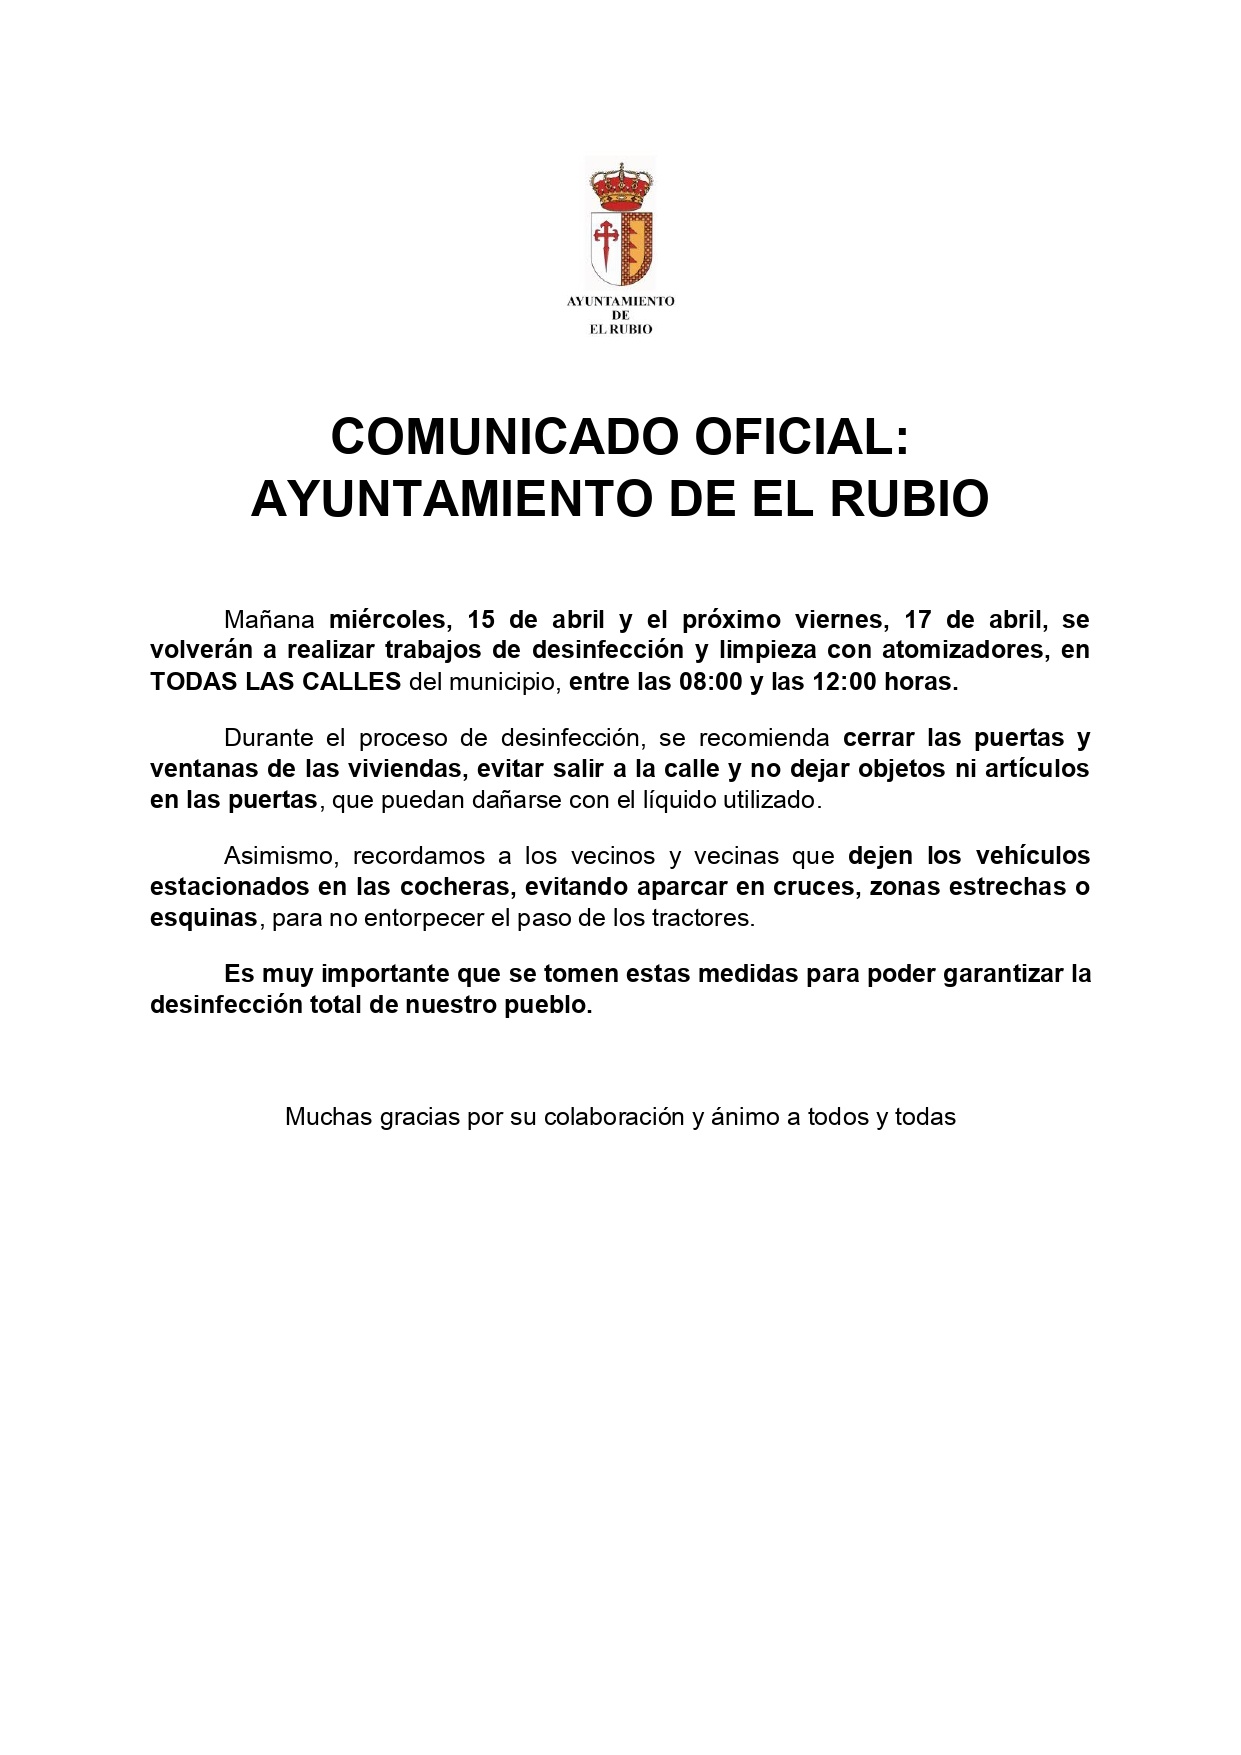 9.-COMUNICADO OFICIAL AYTO RUBIO 14-04-20 (1)_page-0001